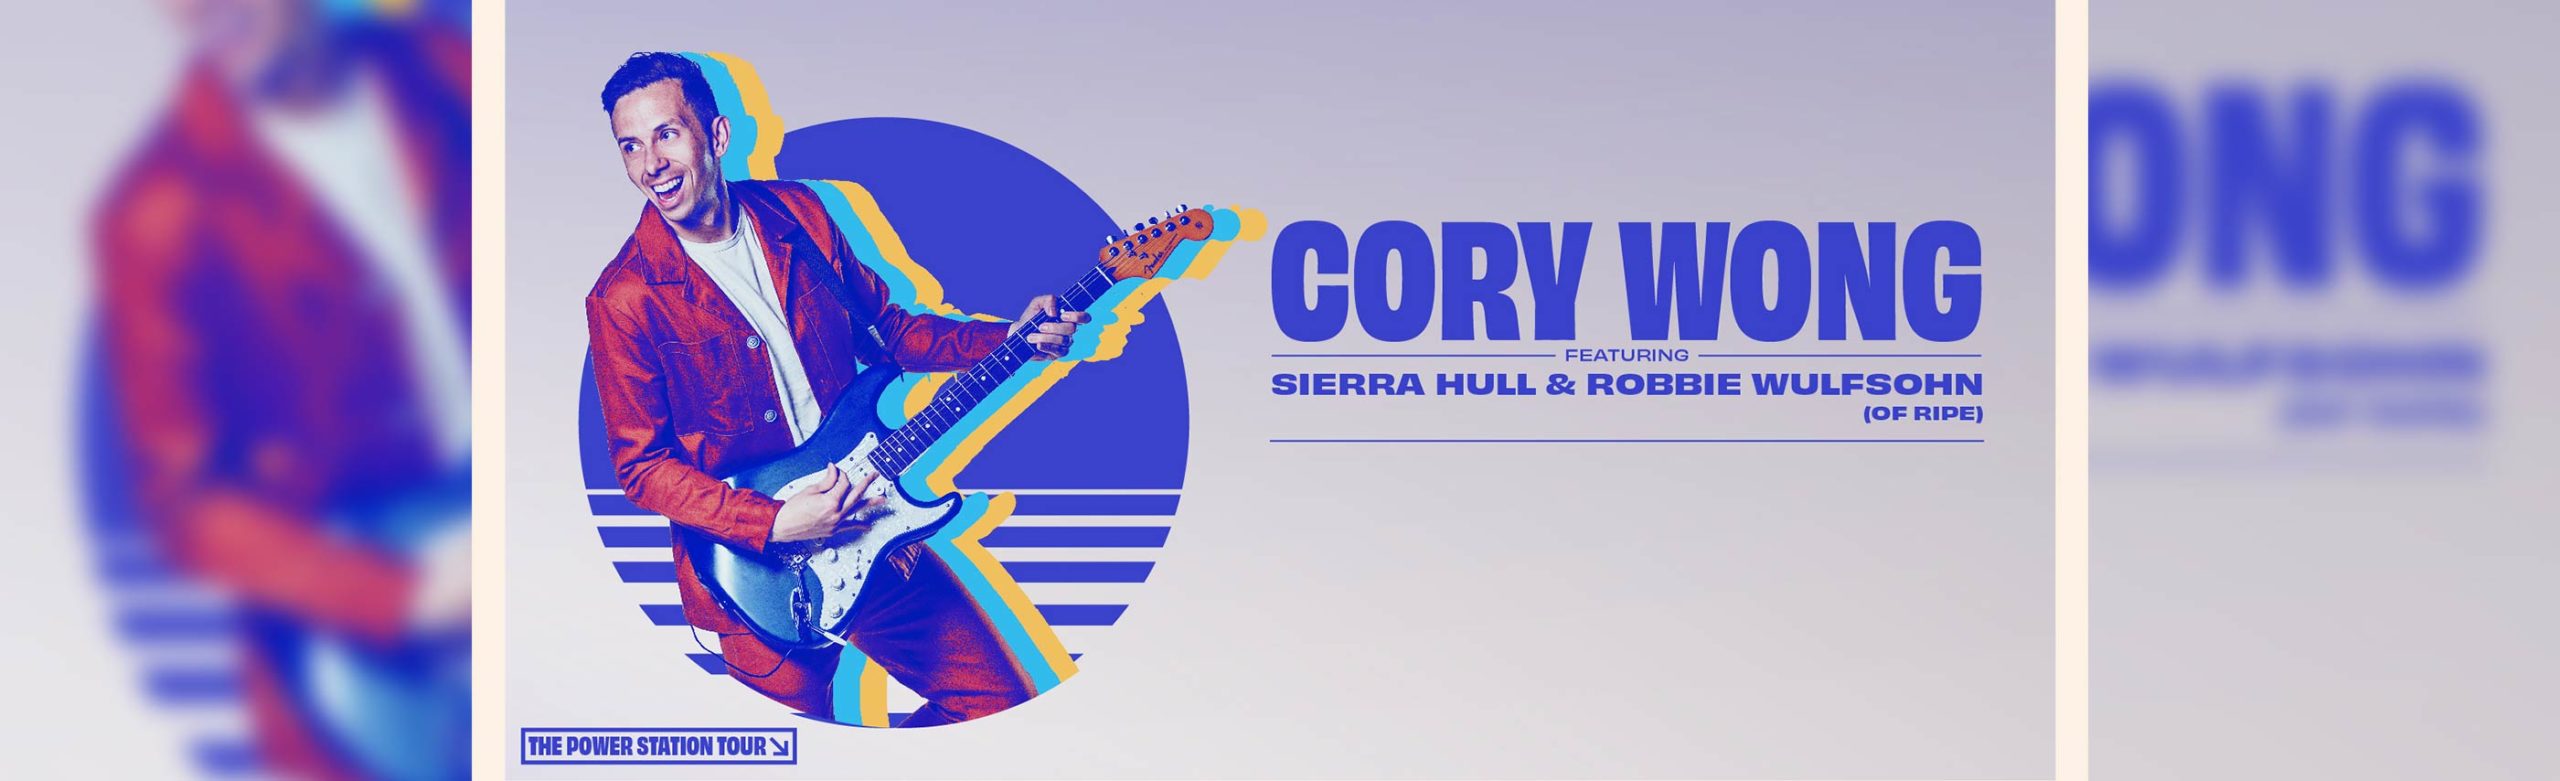 Cory Wong Announces Bozeman Concert feat. Sierra Hull & Robbie Wulfsohn (of Ripe) Image